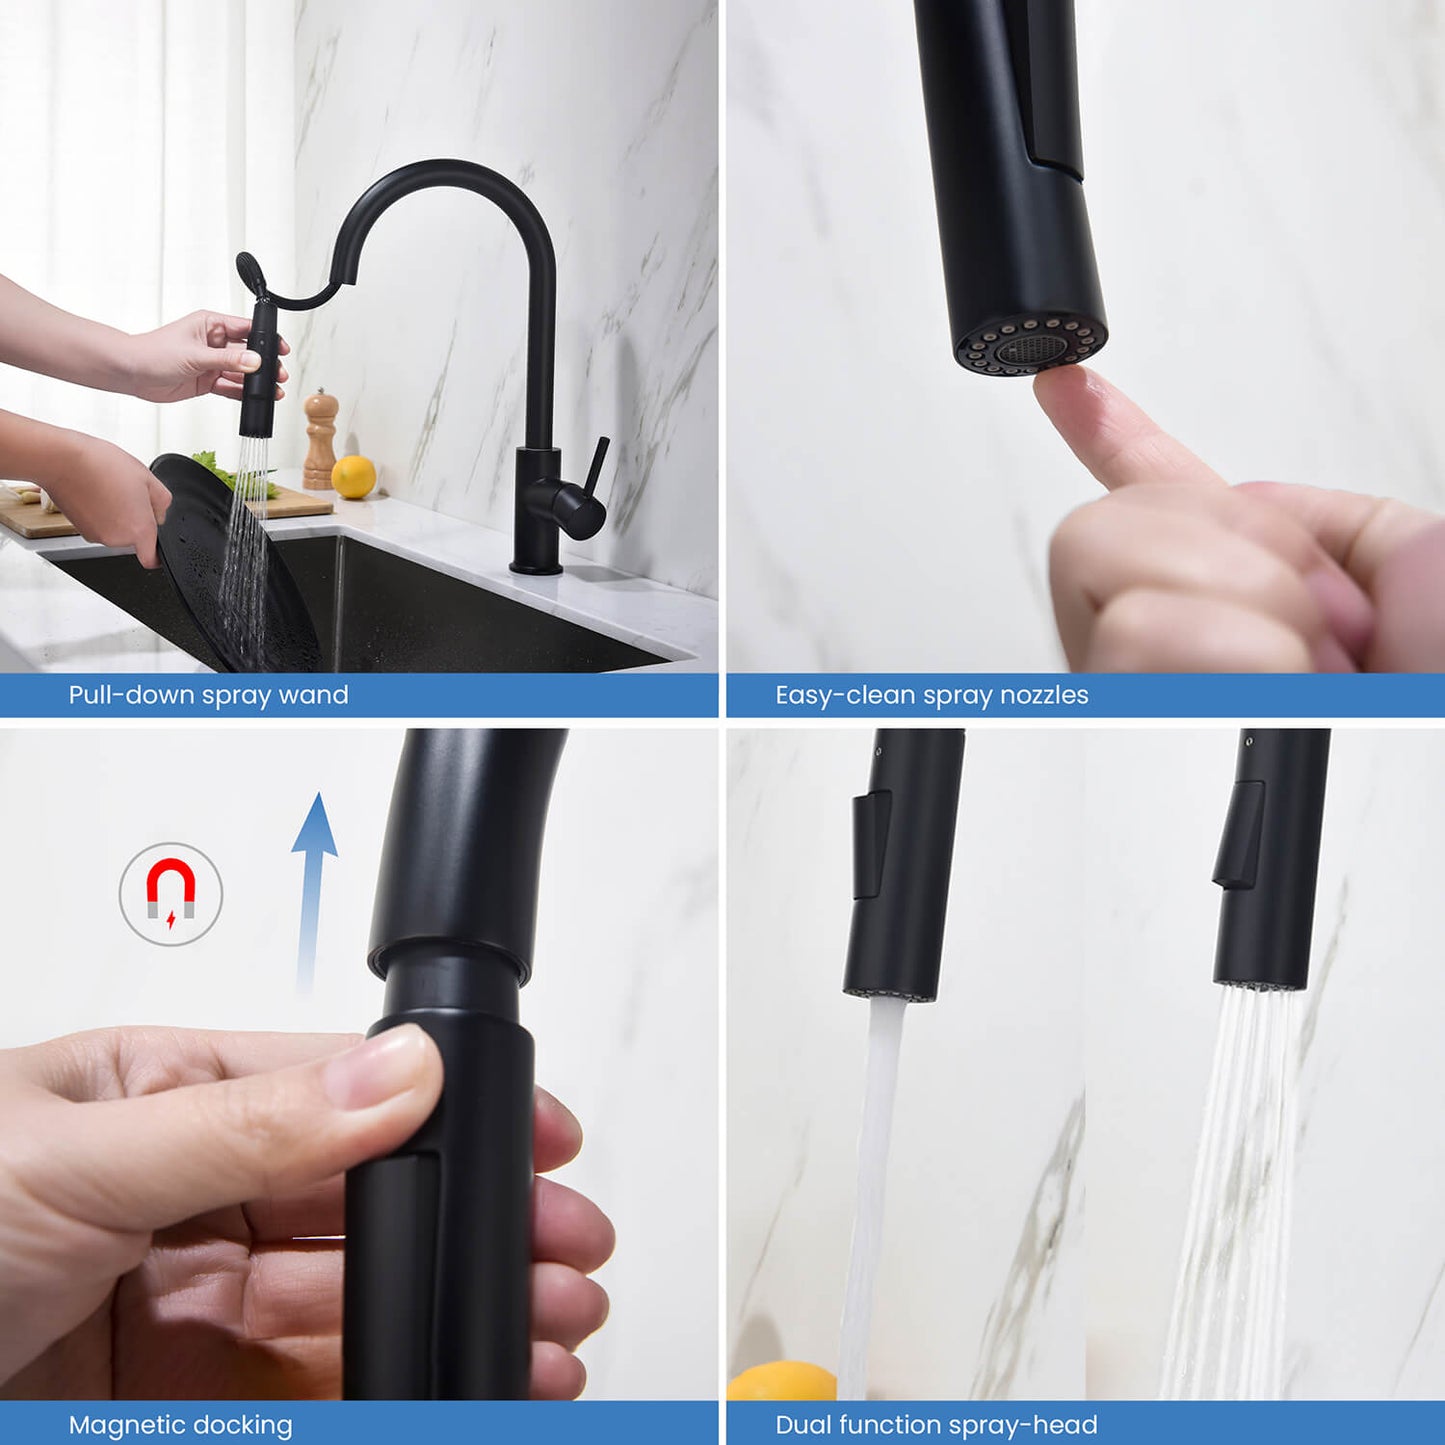 Kibi Circular Single Handle Pull Down Kitchen Faucet in Matte Black Finish